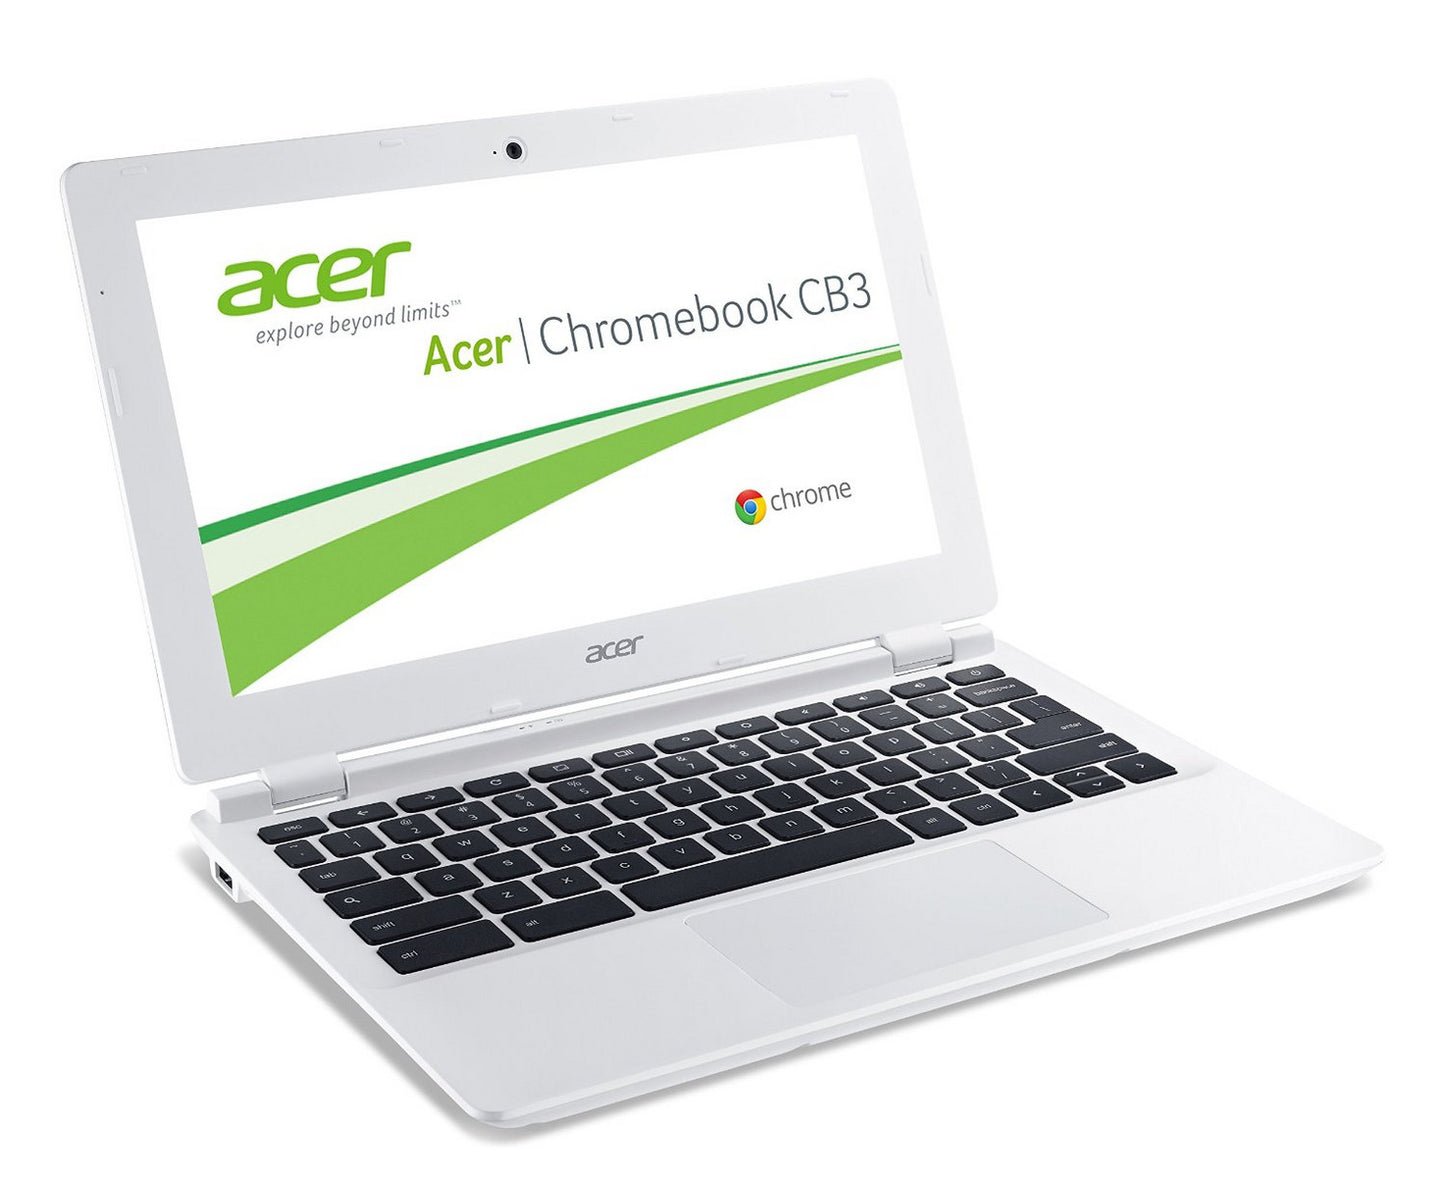 Refurbished Acer CB3 Chromebook - Intel Celeron N2830 CPU - 2GB RAM - 16GB Storage